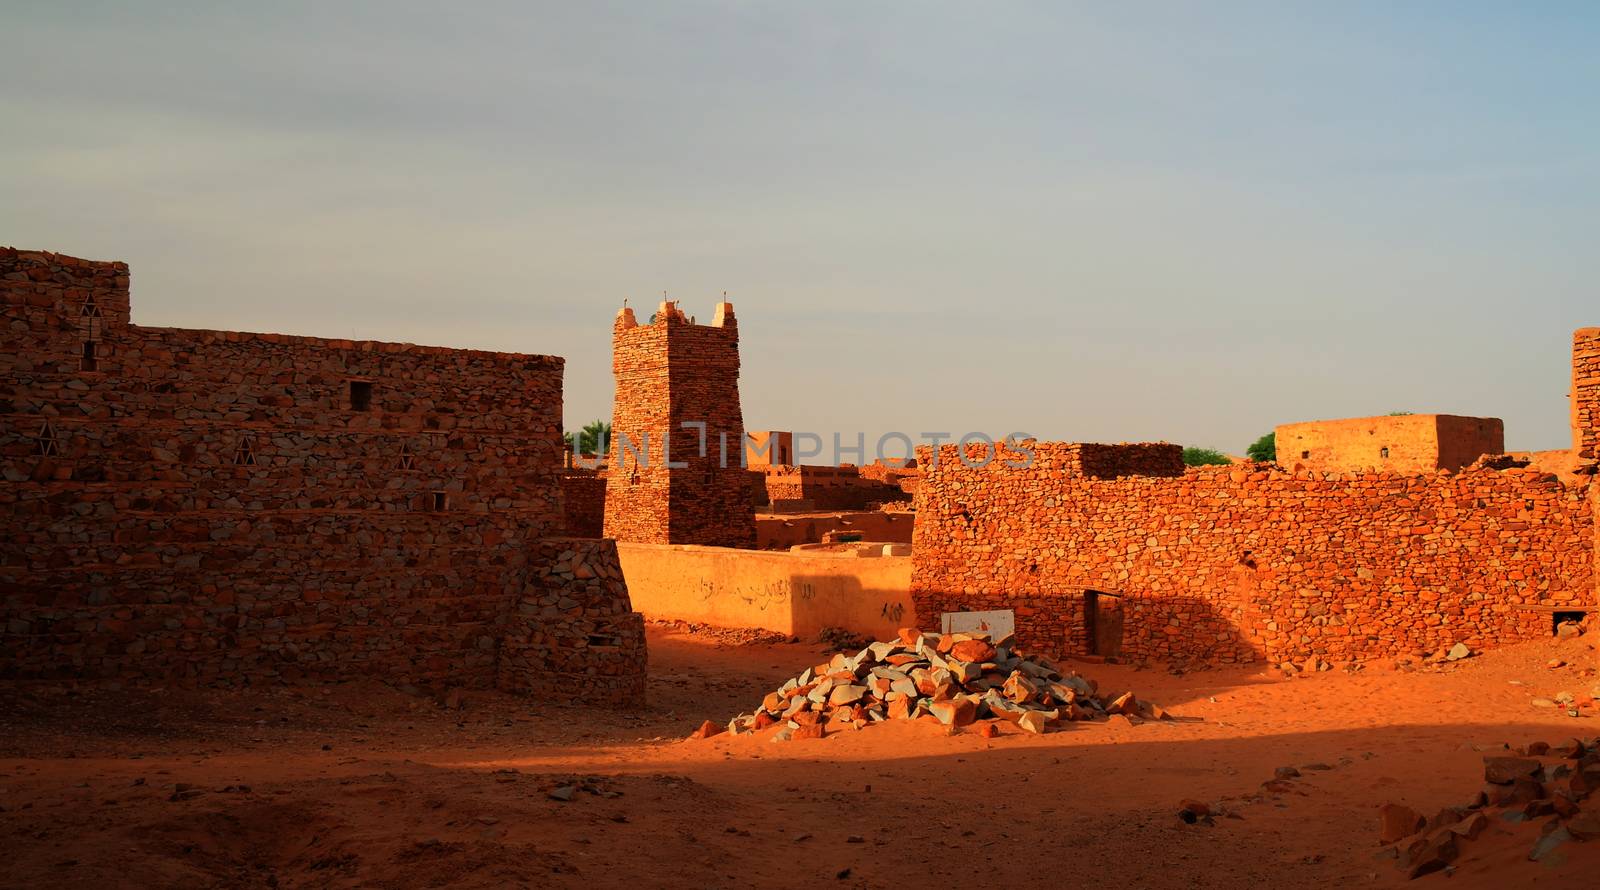 Chinguetti mosque, Mauritania by homocosmicos